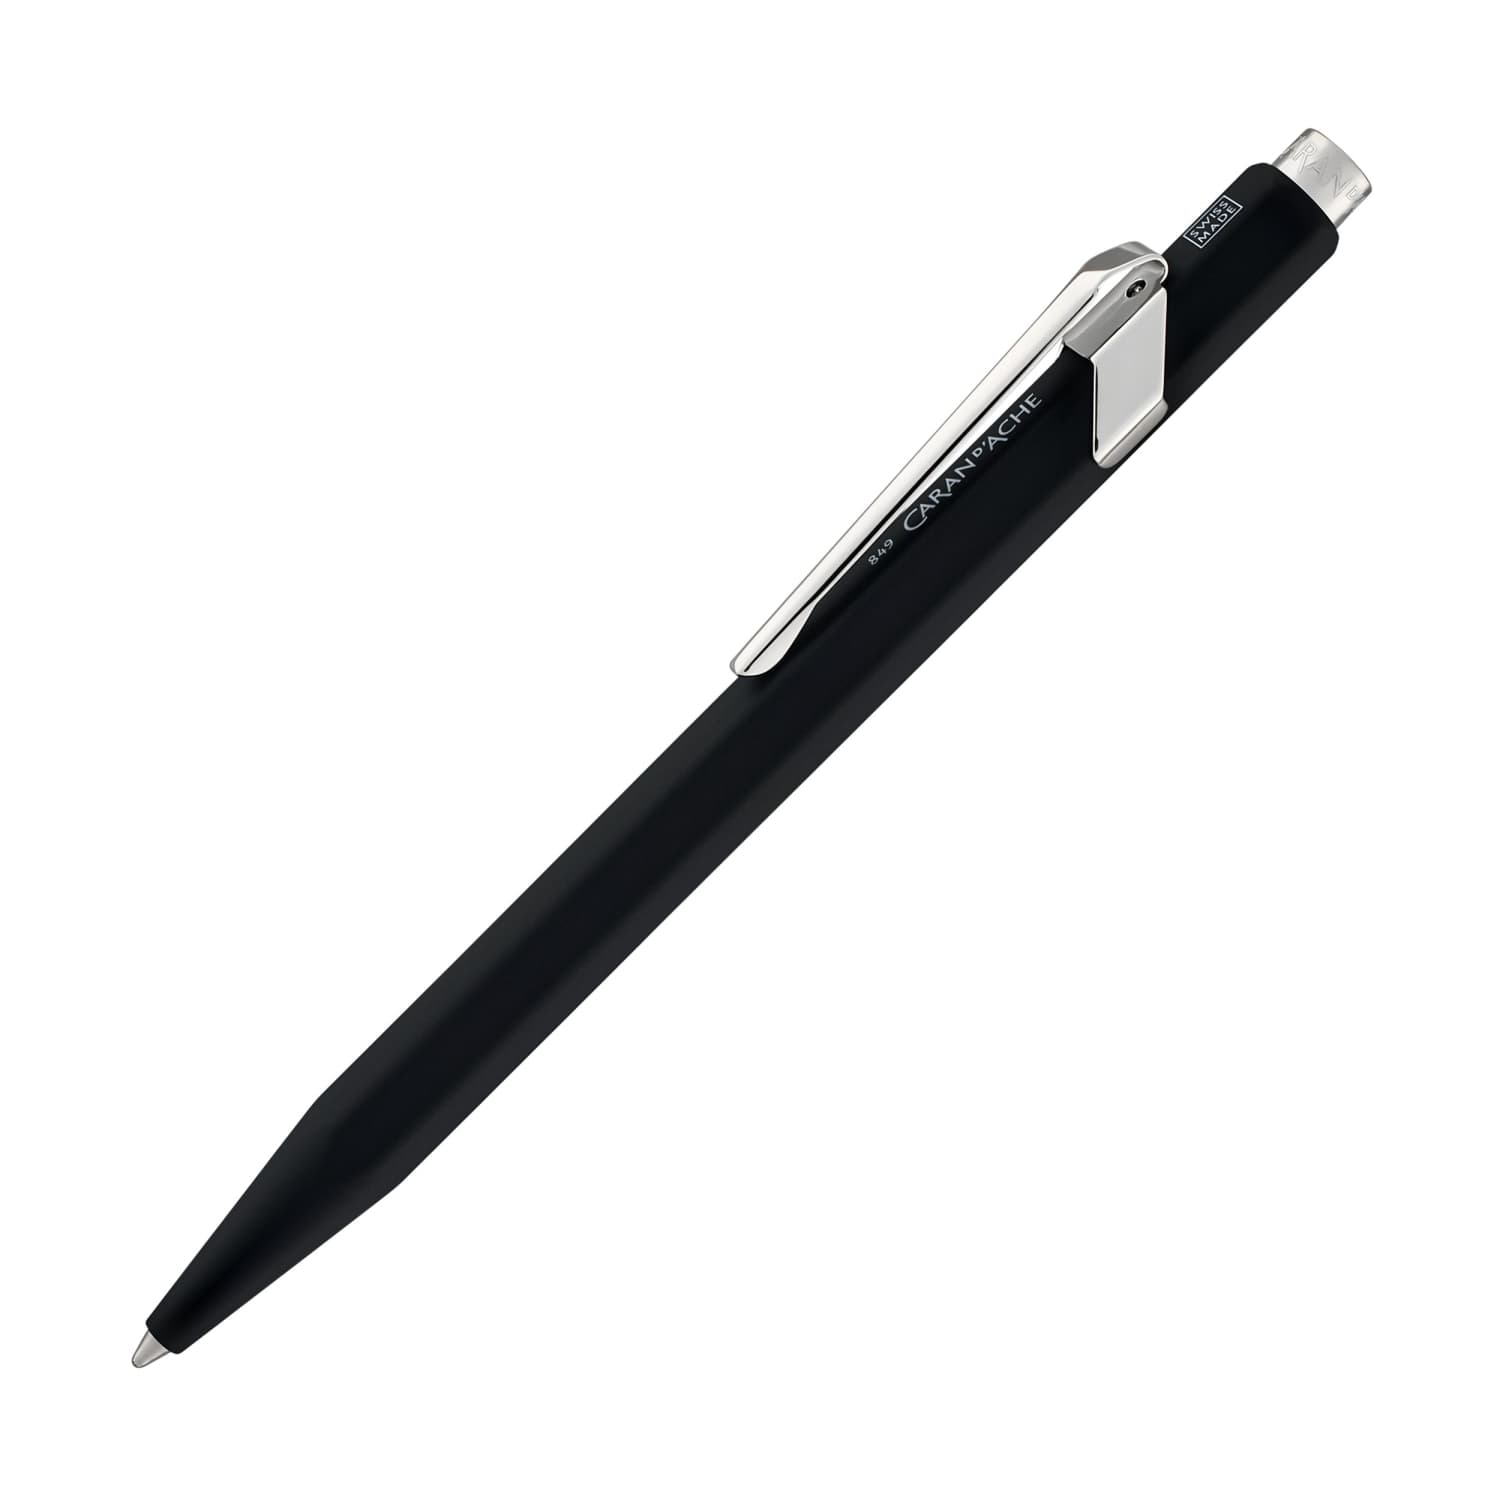 Caran d'Ache 849 Metal Ballpoint Pen in Black